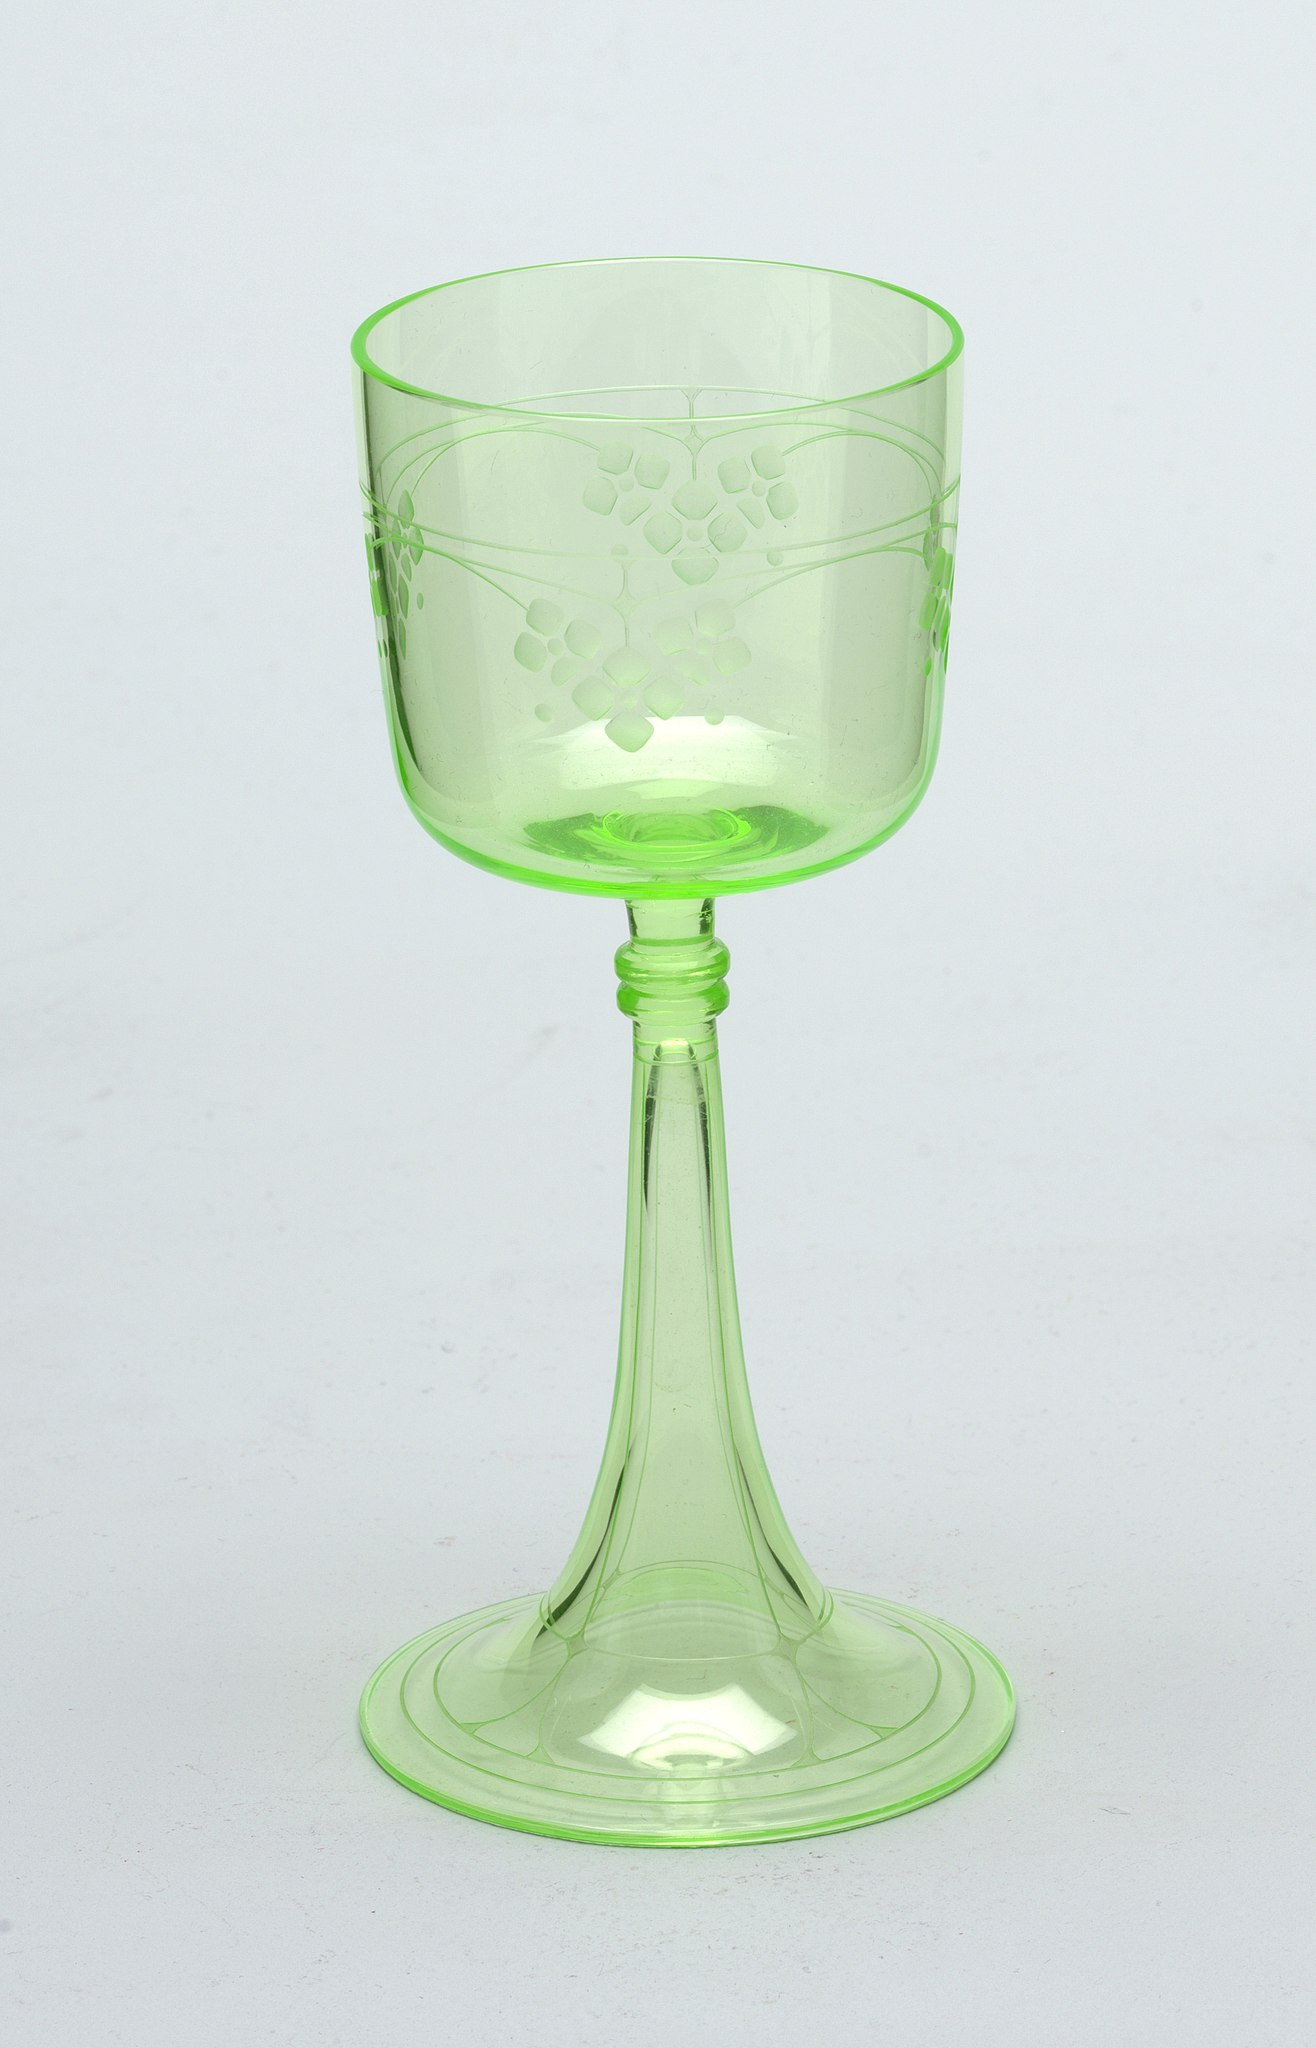 https://upload.wikimedia.org/wikipedia/commons/thumb/f/f8/No._222_Rhine_Wine_Glass%2C_1905_%28CH_18731875%29.jpg/1316px-No._222_Rhine_Wine_Glass%2C_1905_%28CH_18731875%29.jpg